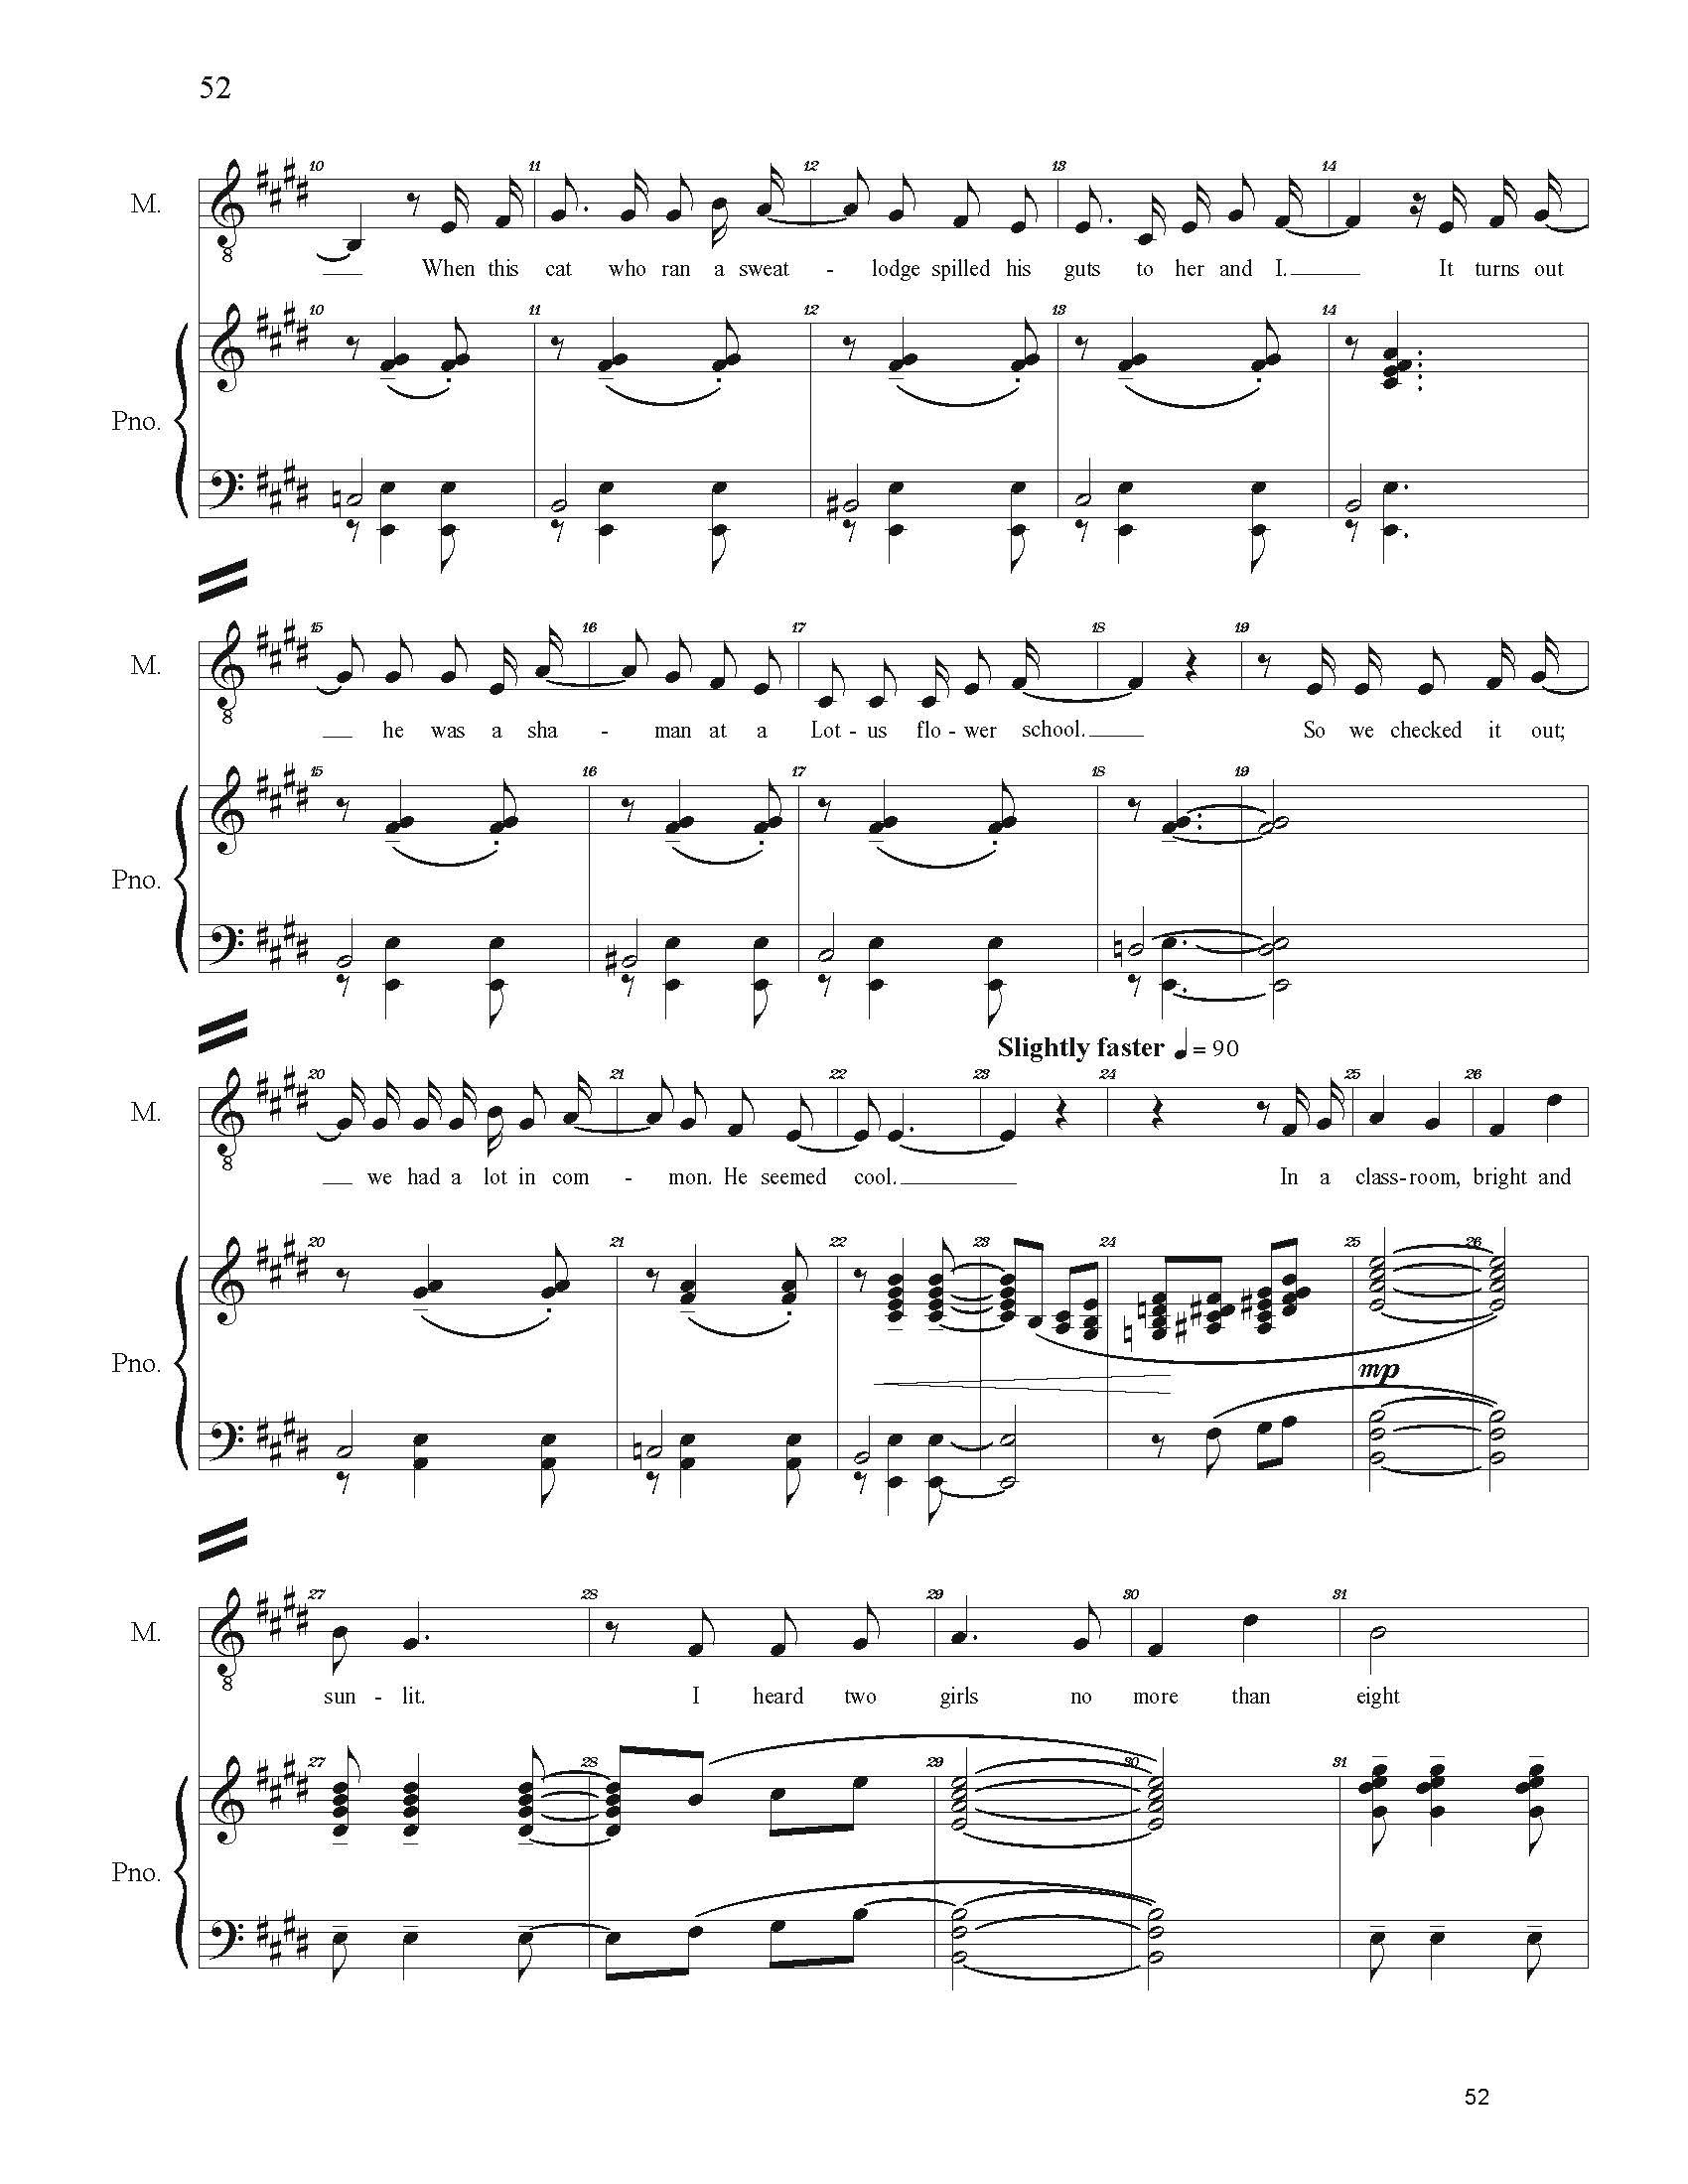 FULL PIANO VOCAL SCORE DRAFT 1 - Score_Page_052.jpg